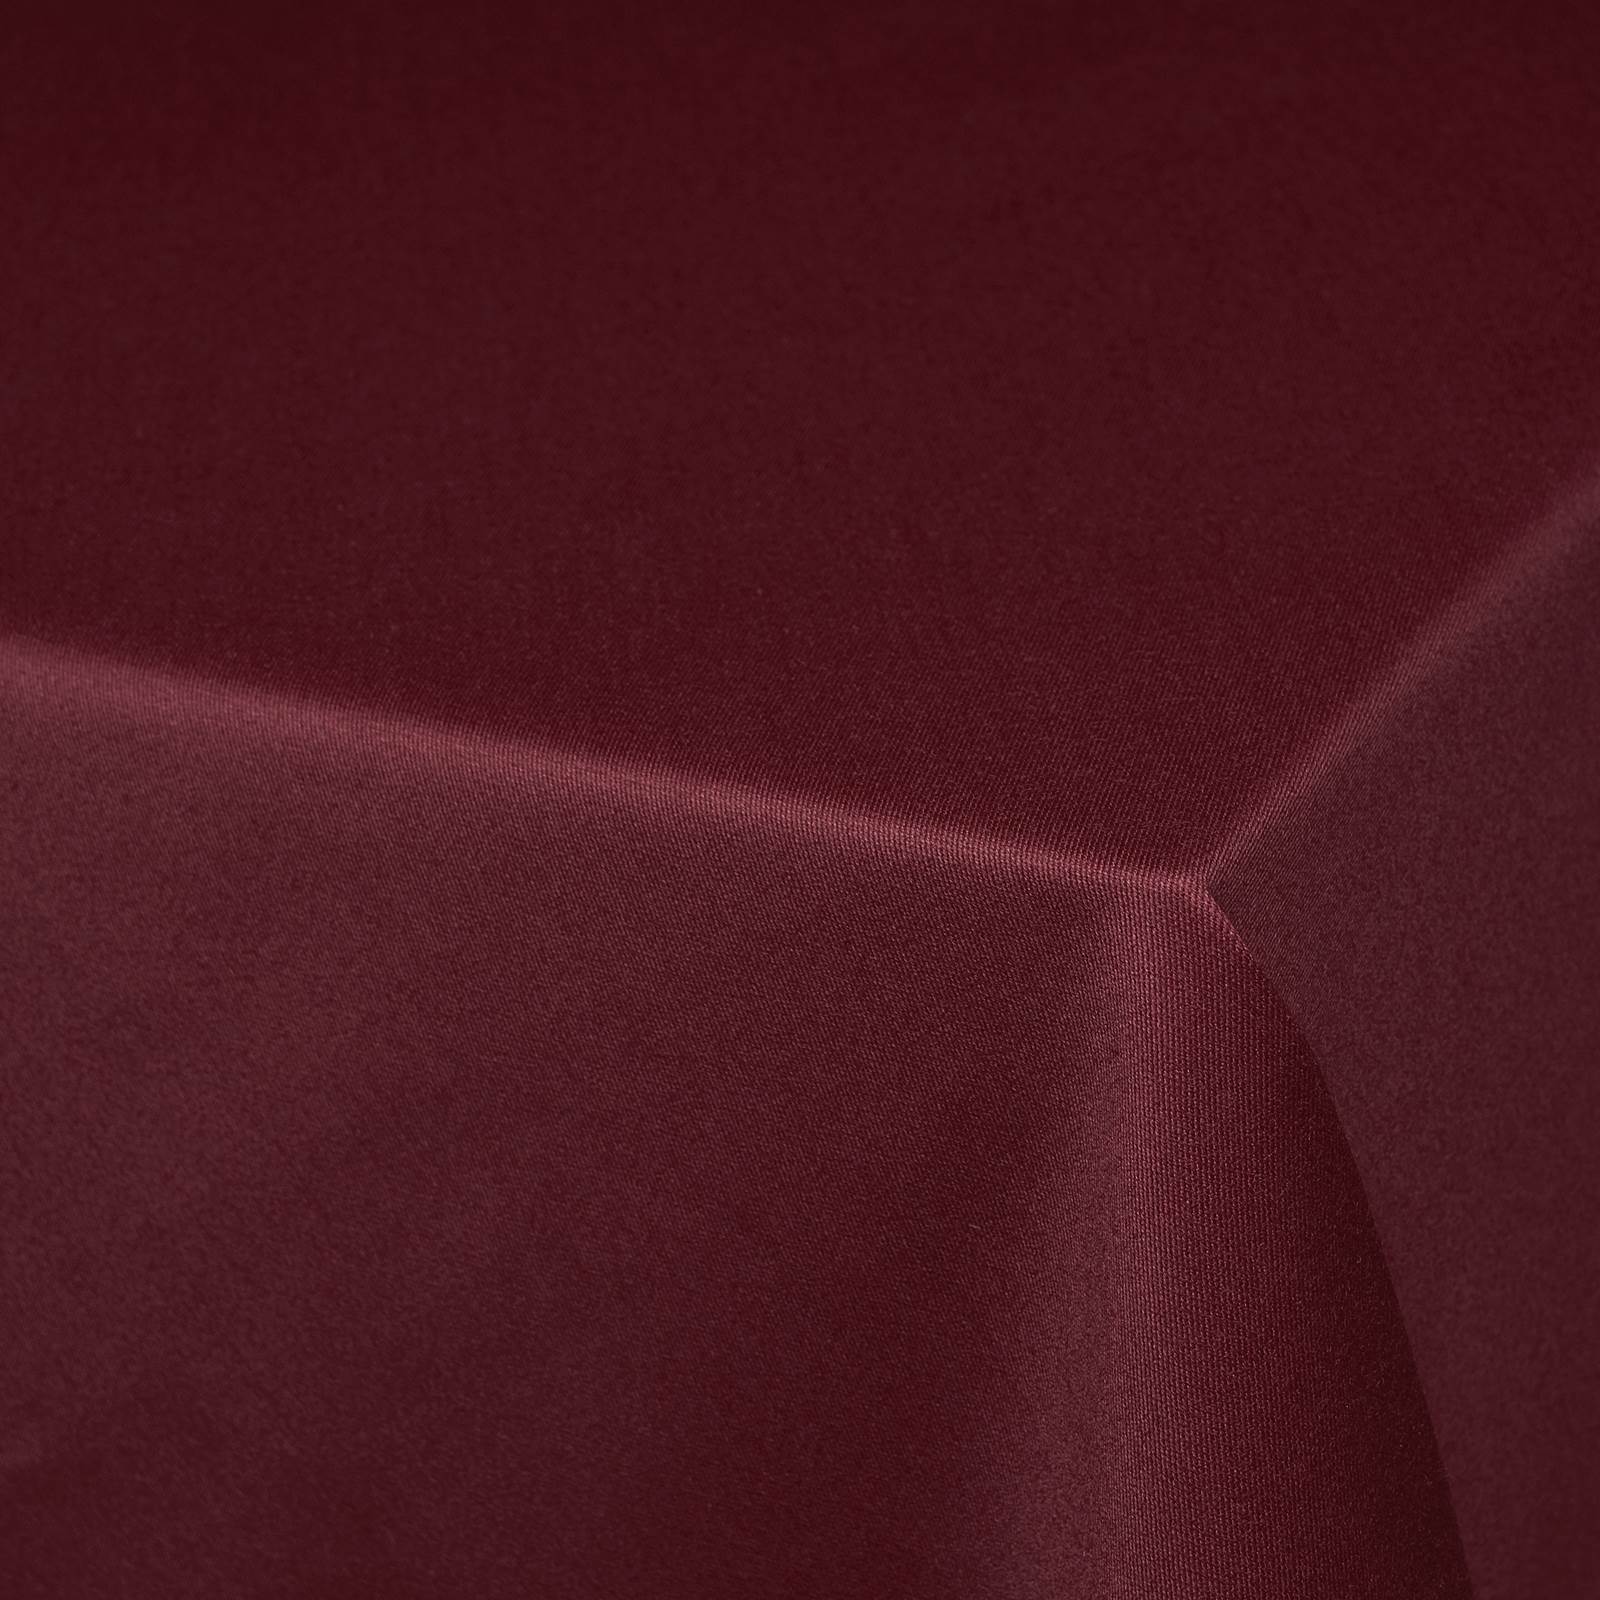 Vera - tela de damasco de dos capas - coloración Indanthren® (burdeos)